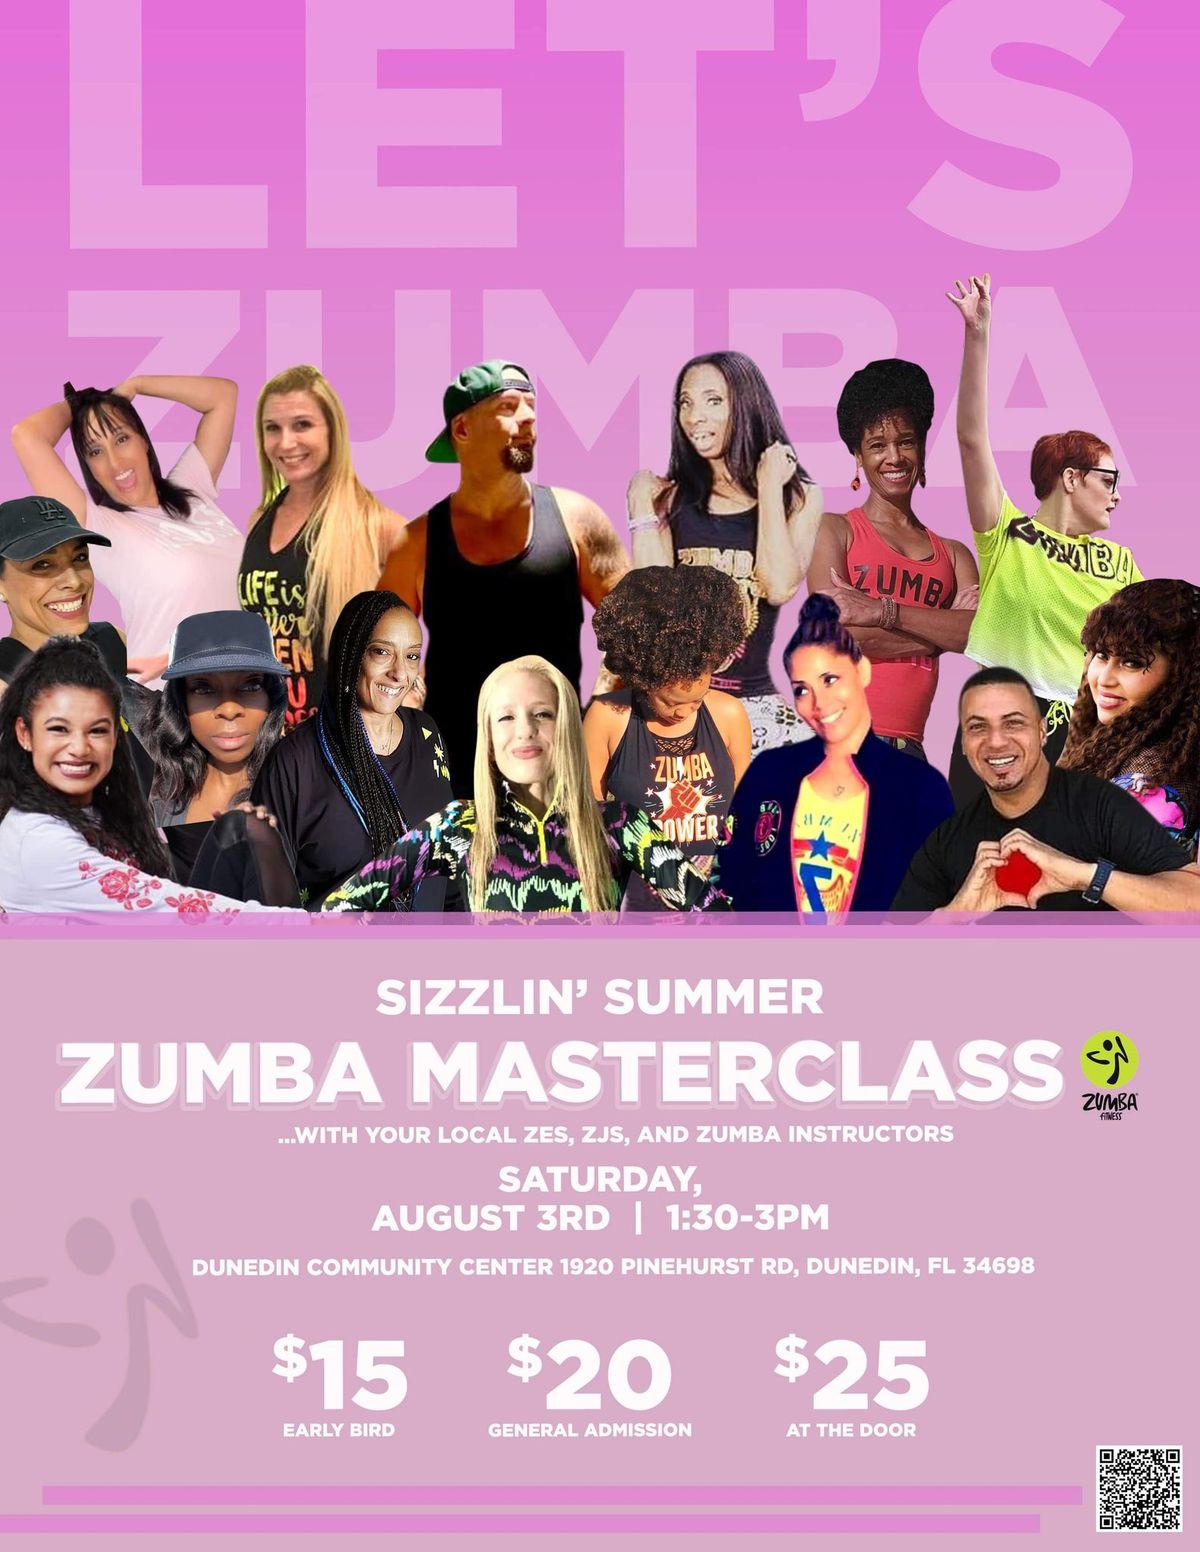 Sizzlin' Summer Zumba Master Class!